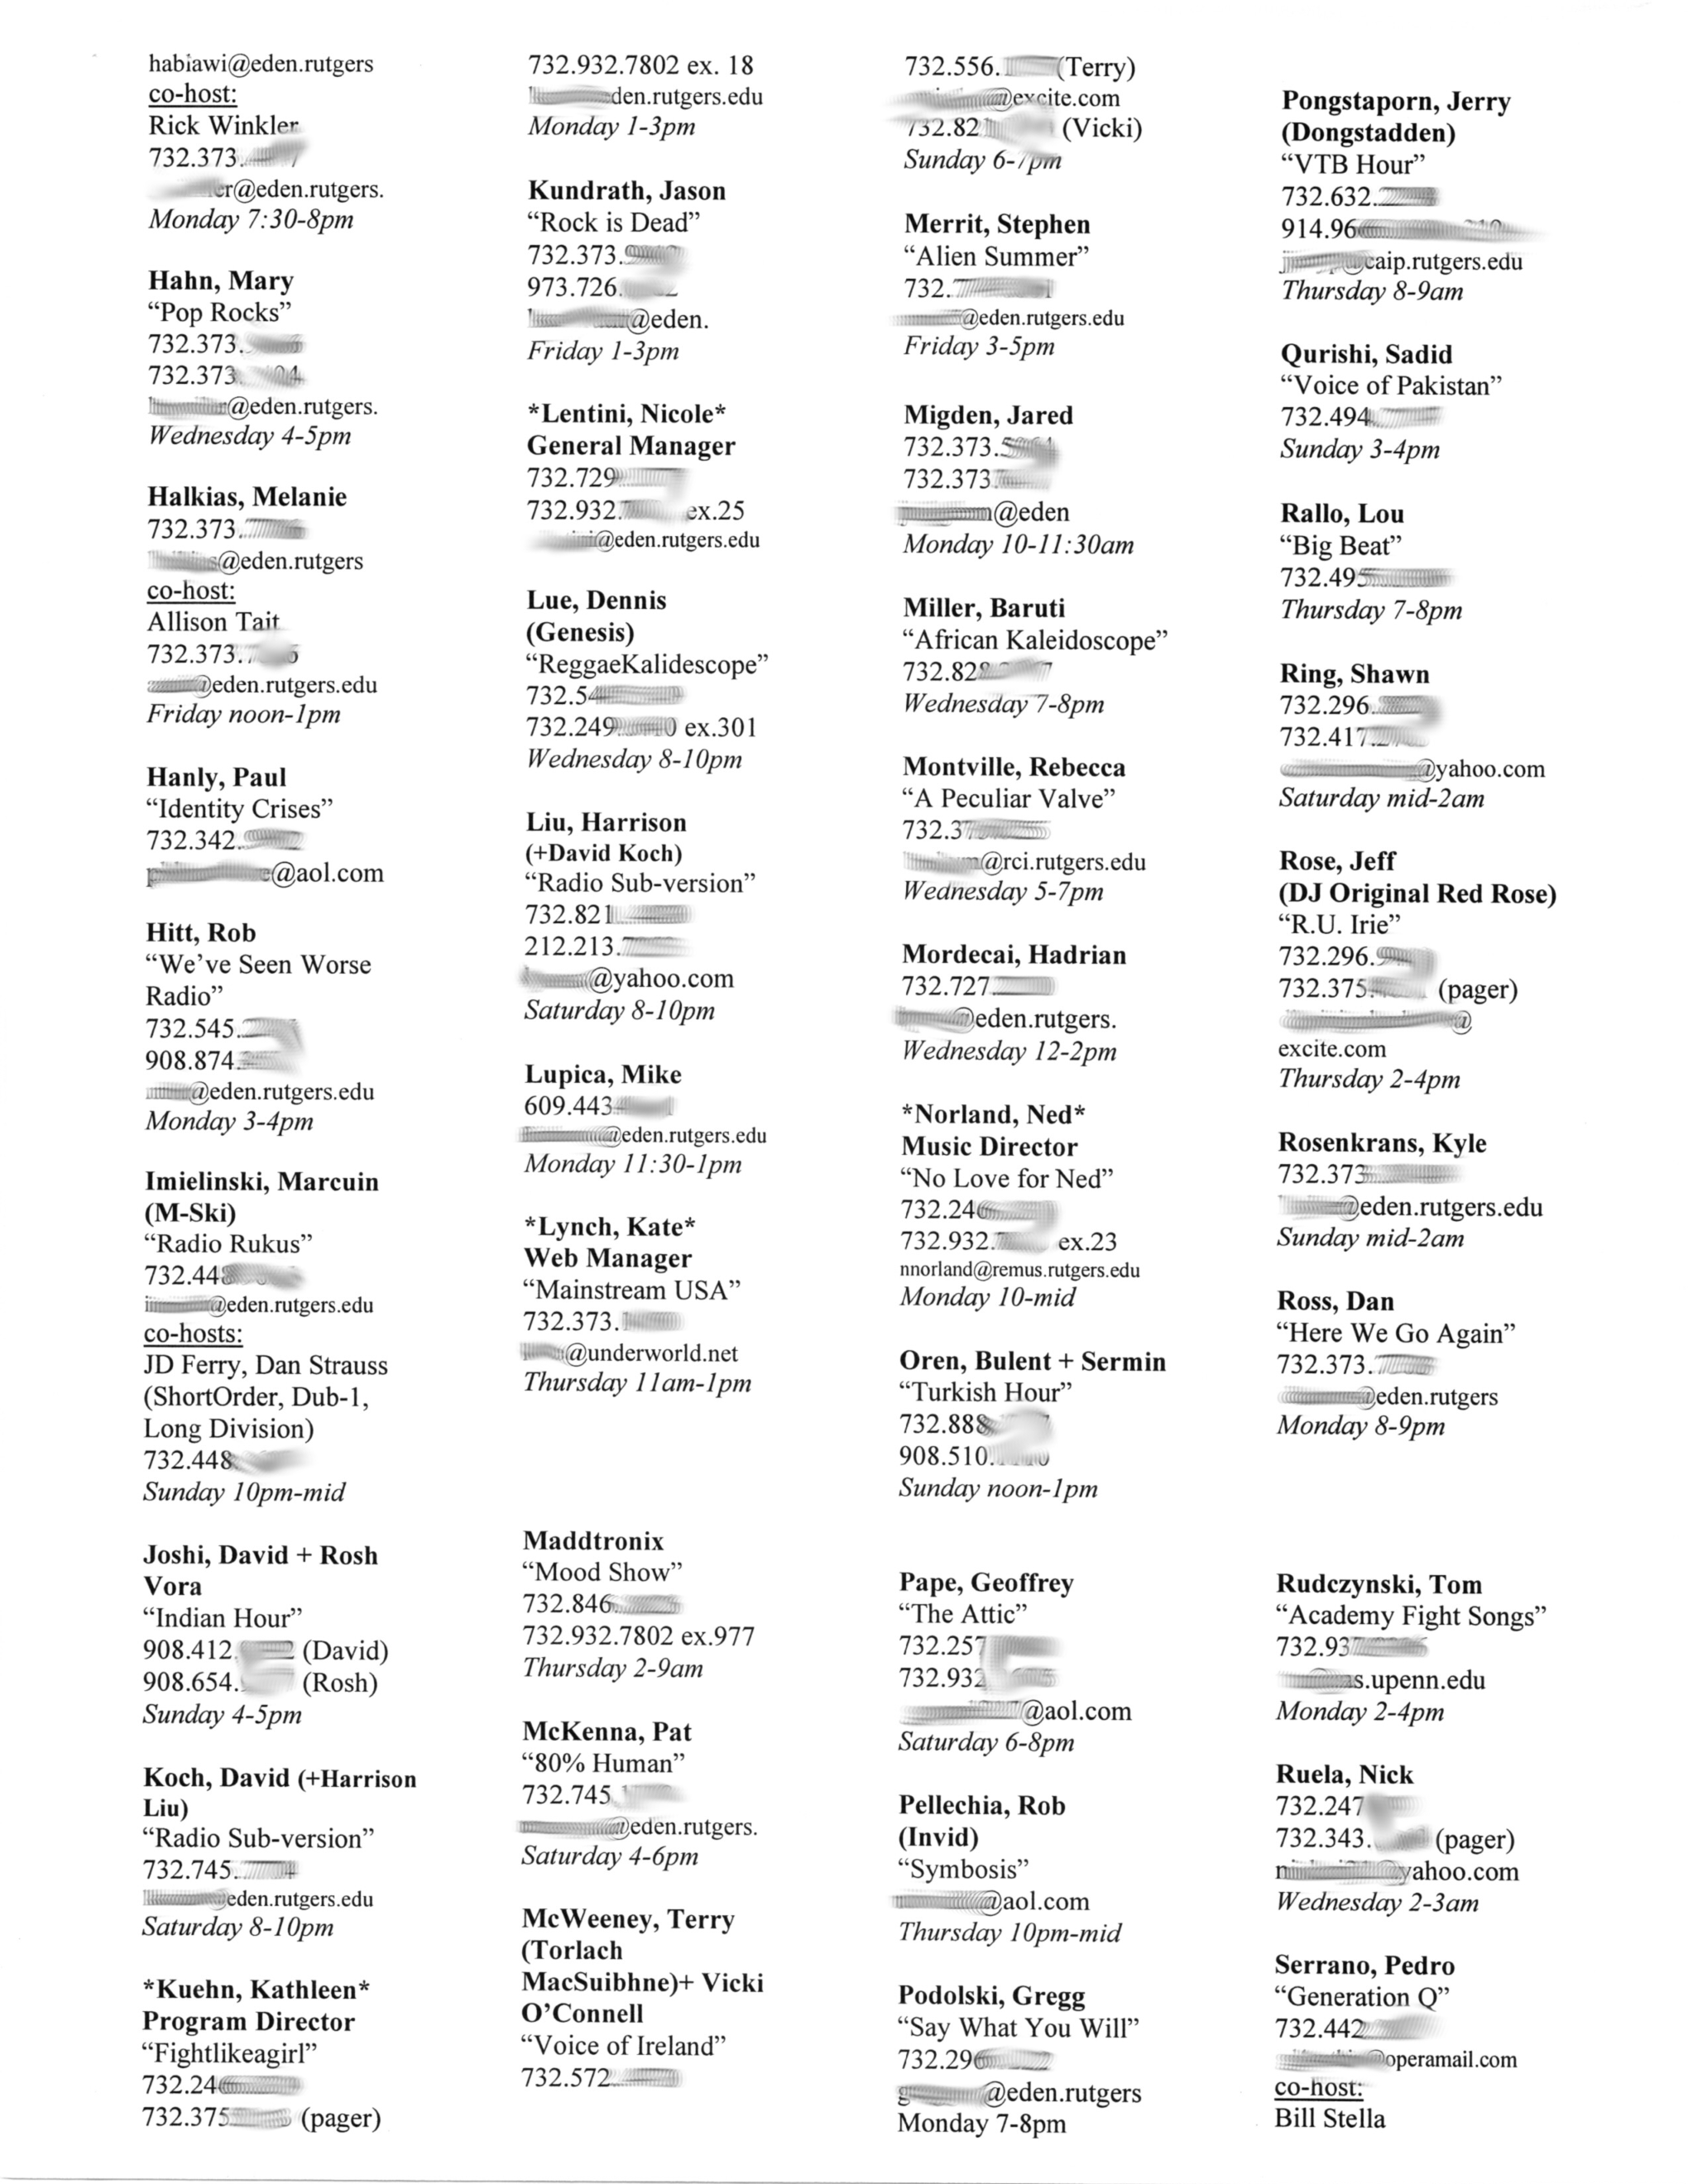 2000 - Phone List Page 2